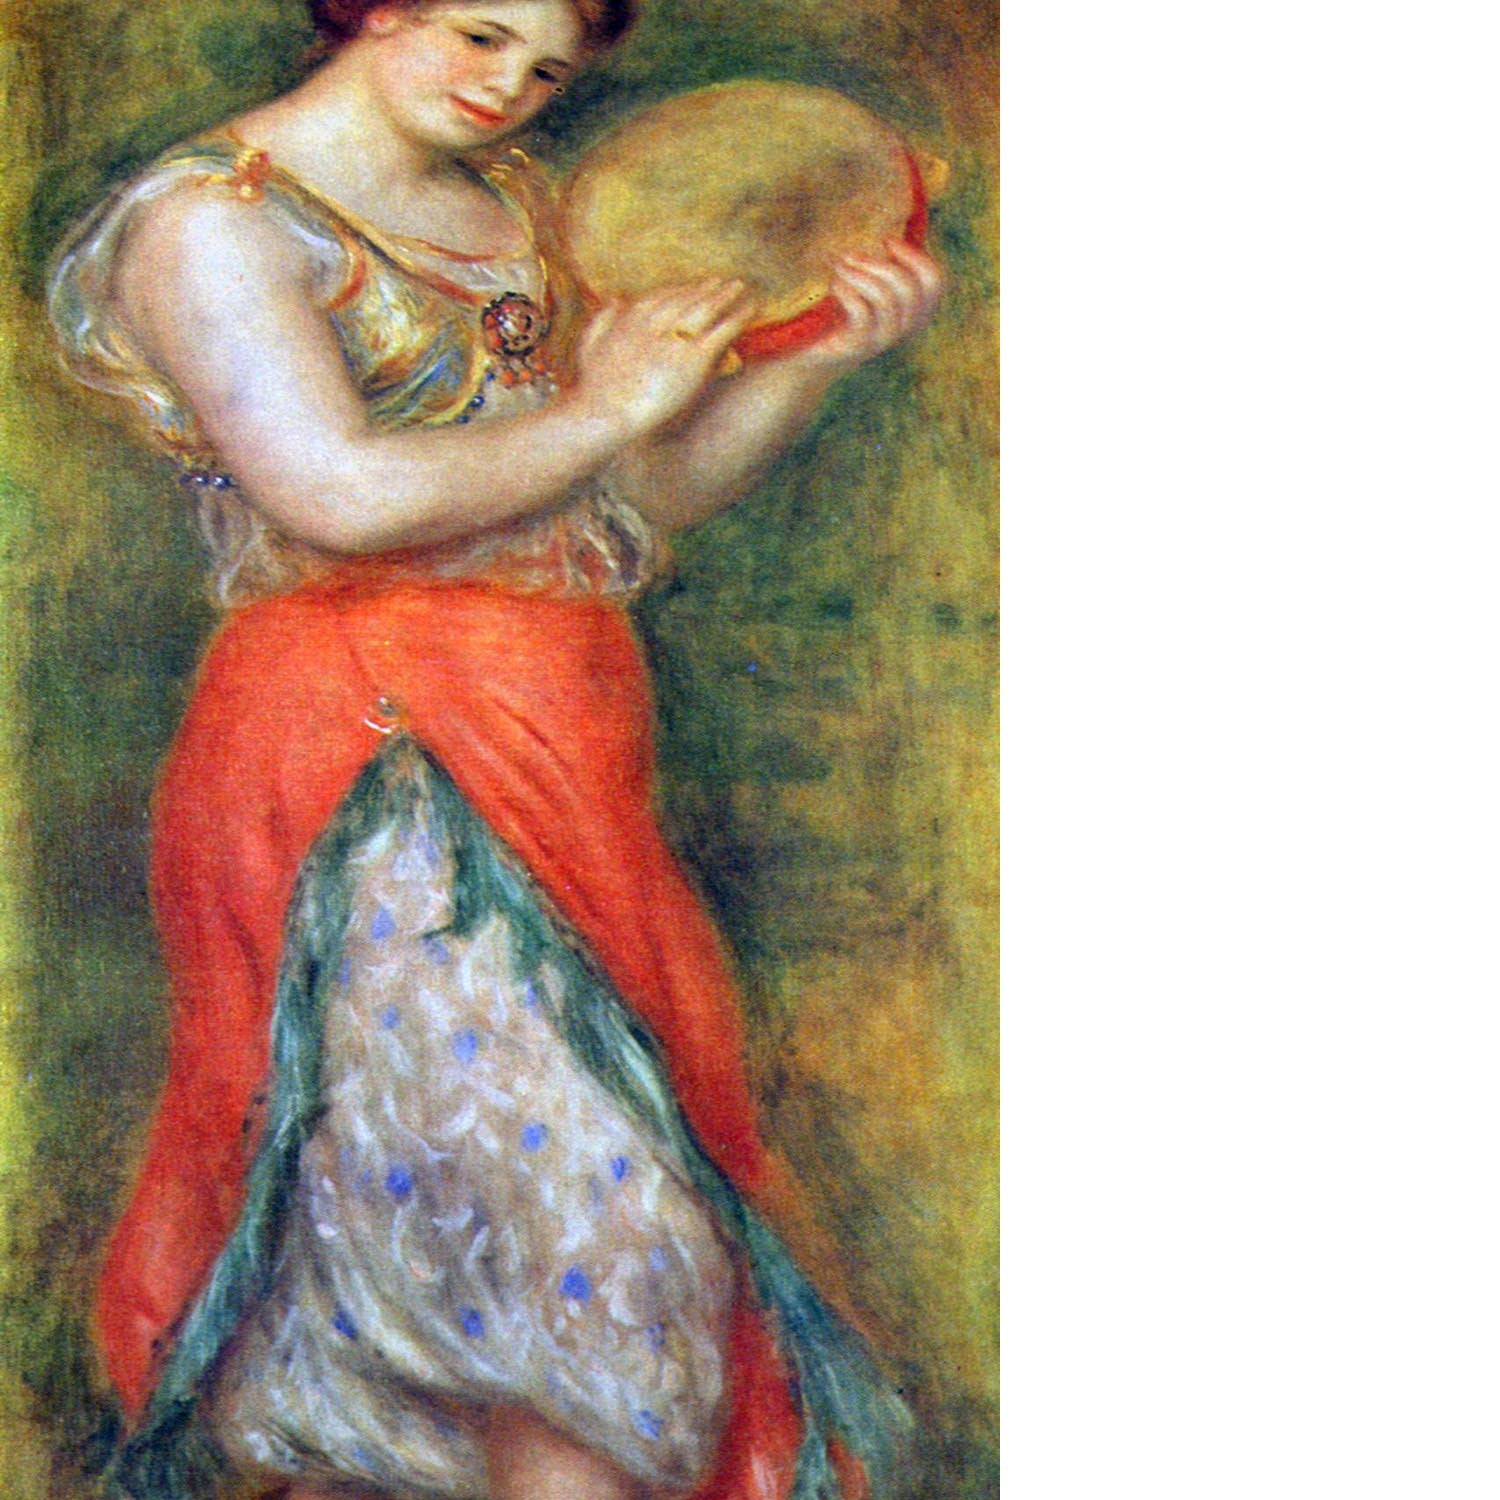 Dancer with tamborine by Renoir Floating Framed Canvas